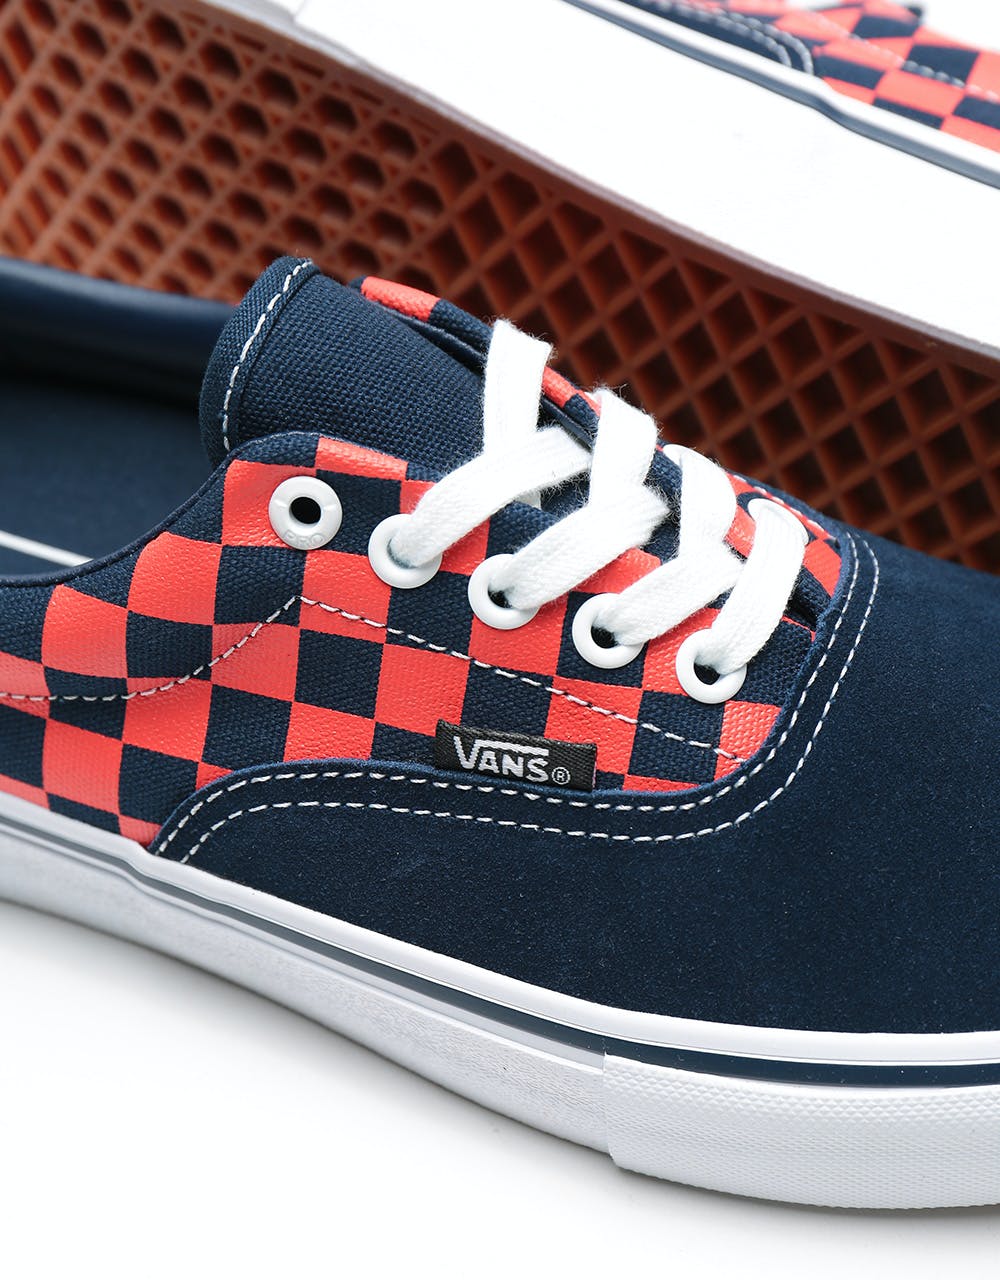 Vans Era Pro Skate Shoes - (Checkerboard) Navy/Orange